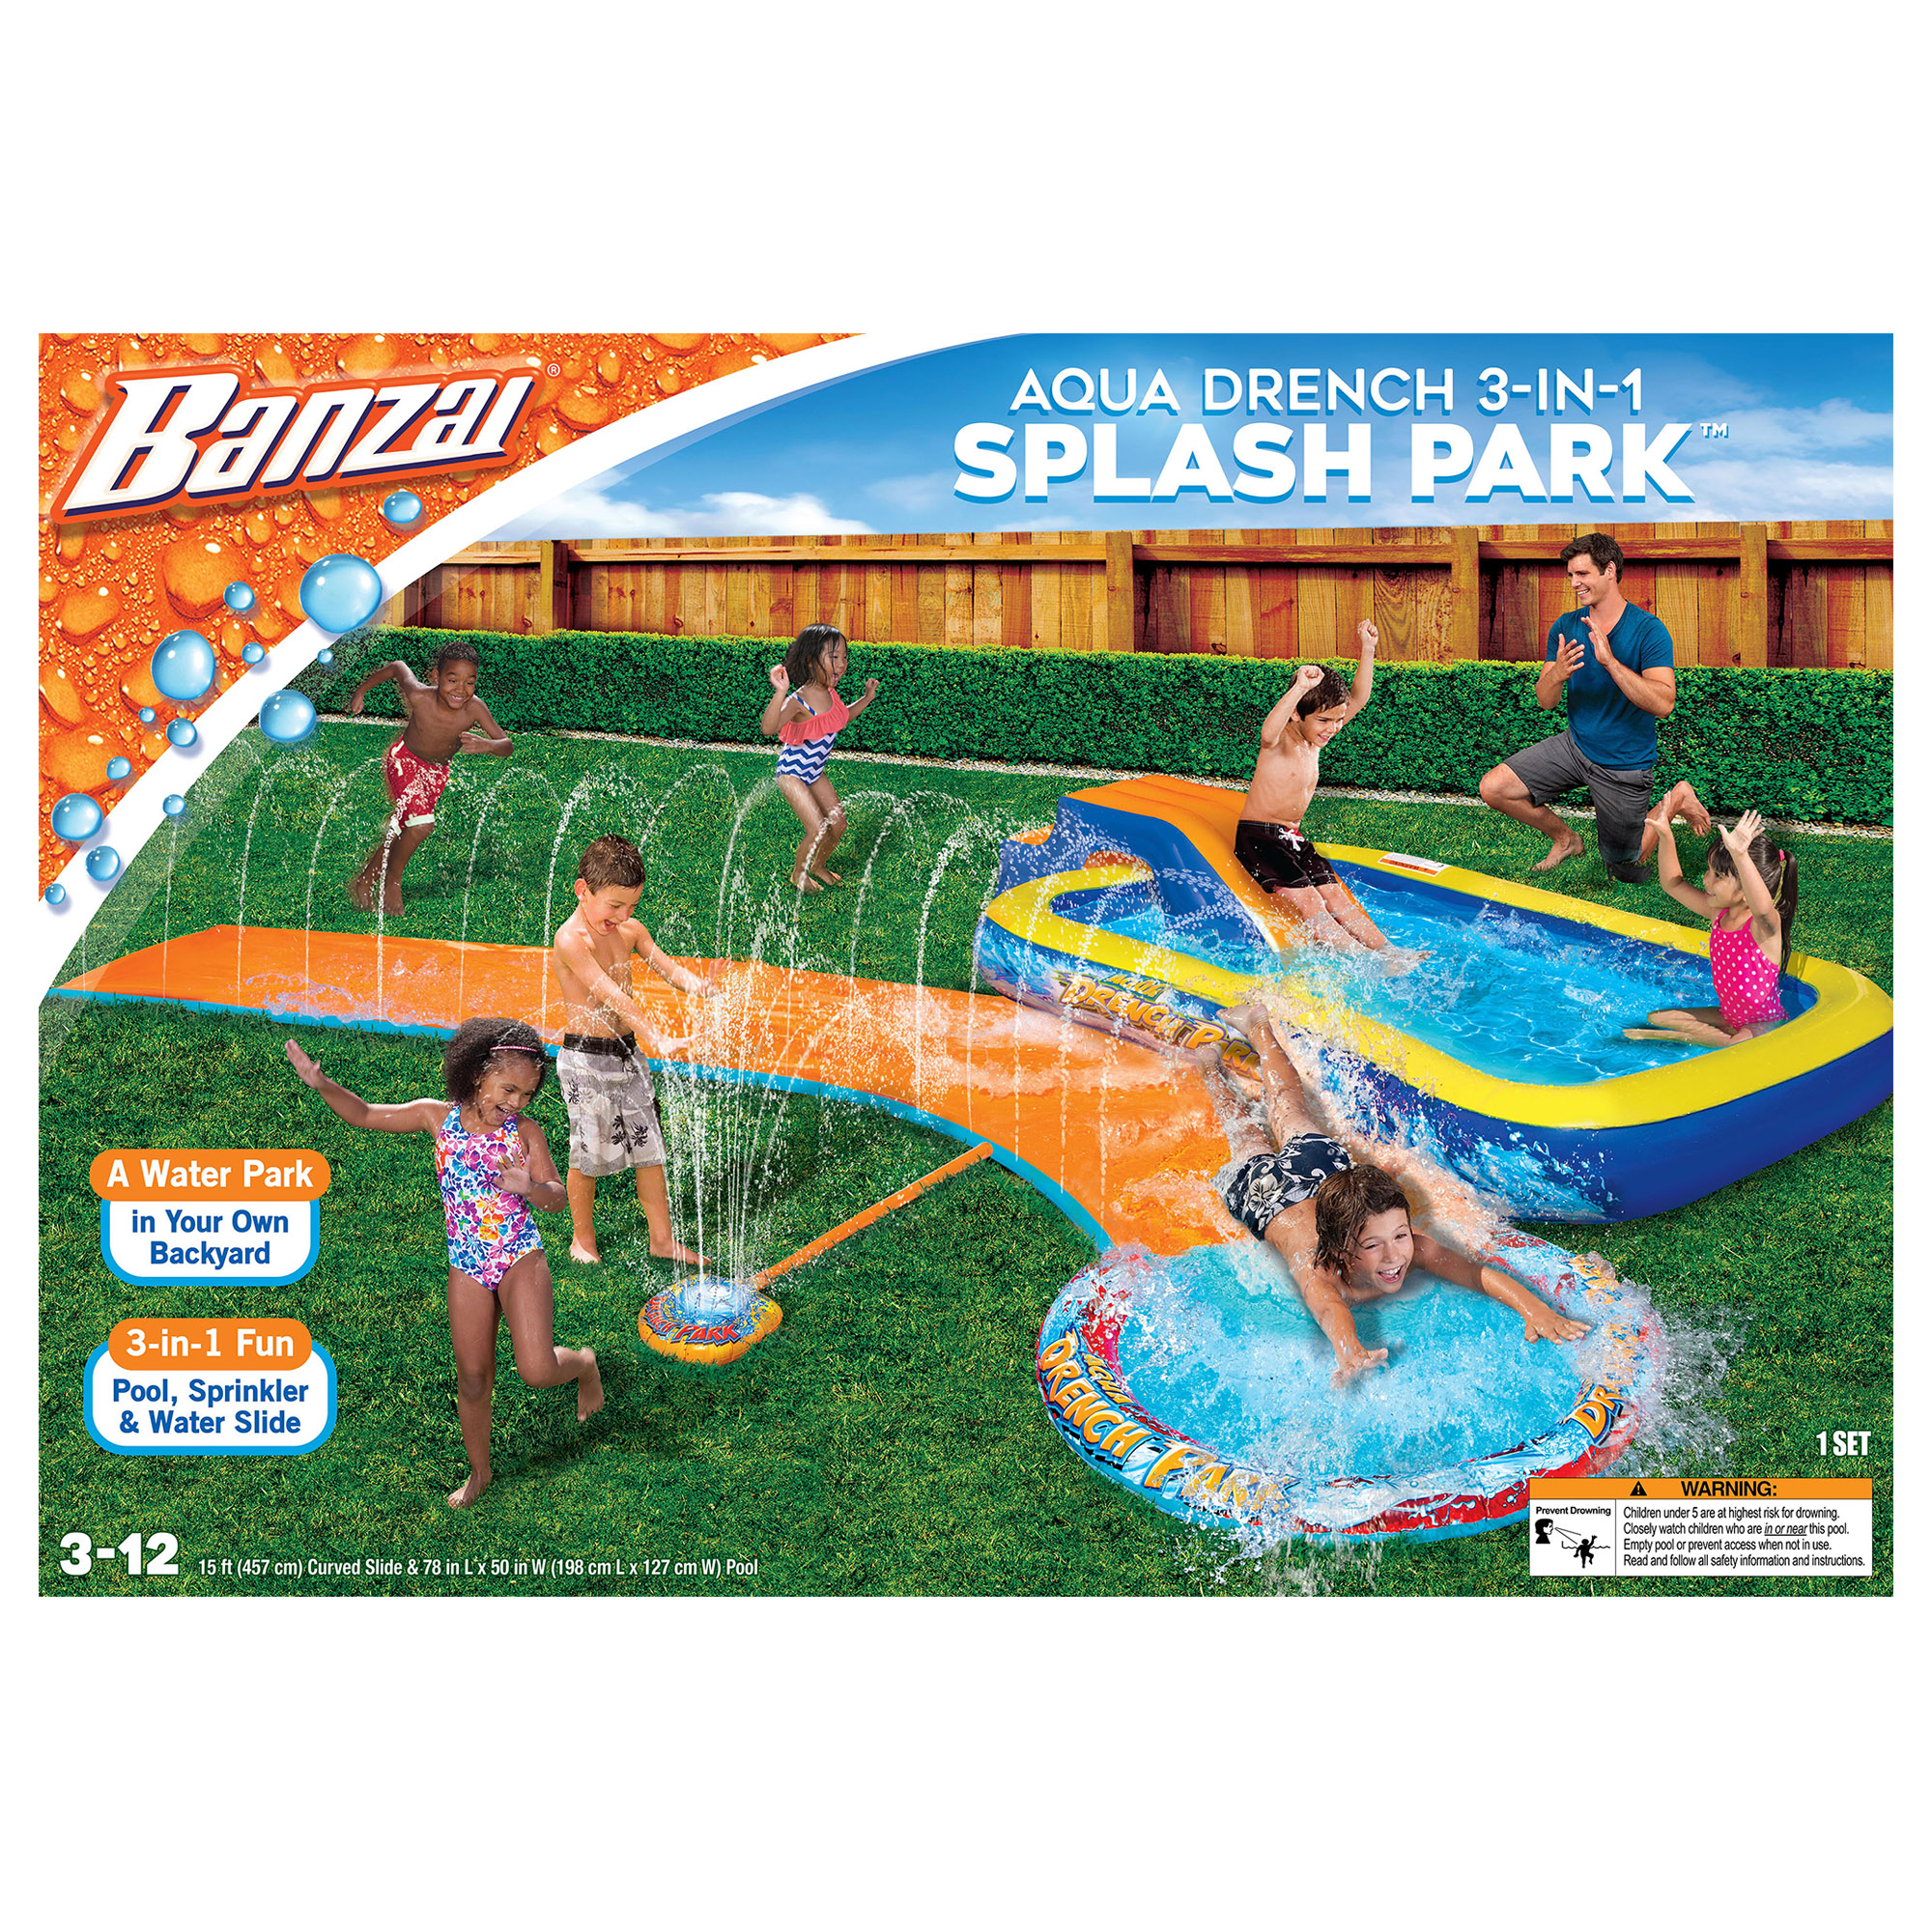 Banzai Aqua Drench 3-in-1 Splash Park w/ Pool, Sprinkler & Waterslide, Child Water Fun, Age 3-12 - image 5 of 12